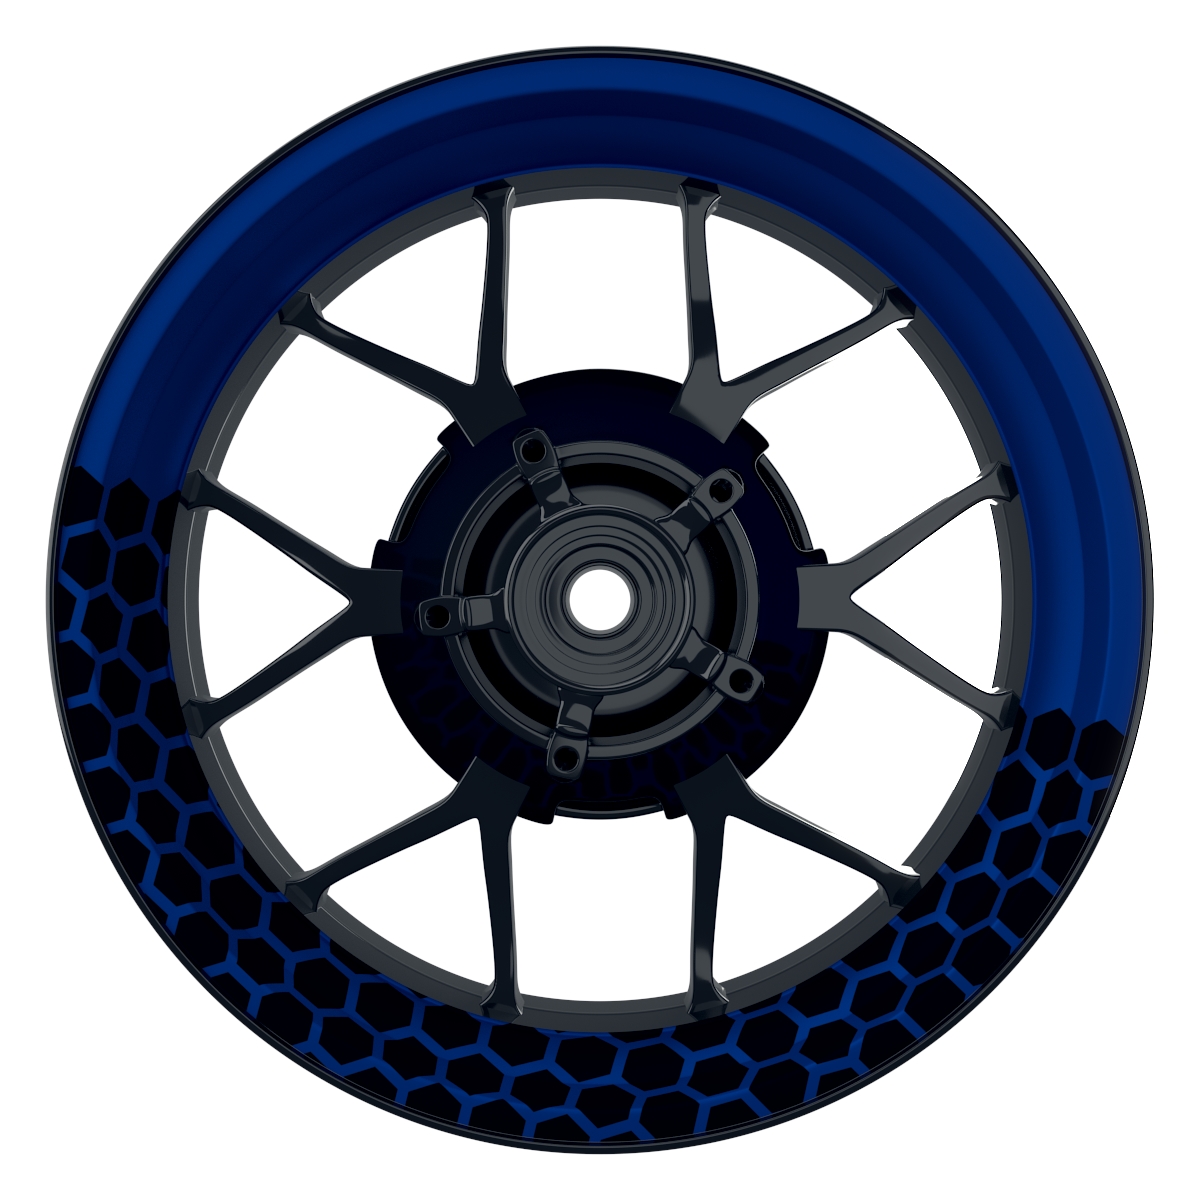 Hexagon halb halb schwarz blau Wheelsticker Felgenaufkleber